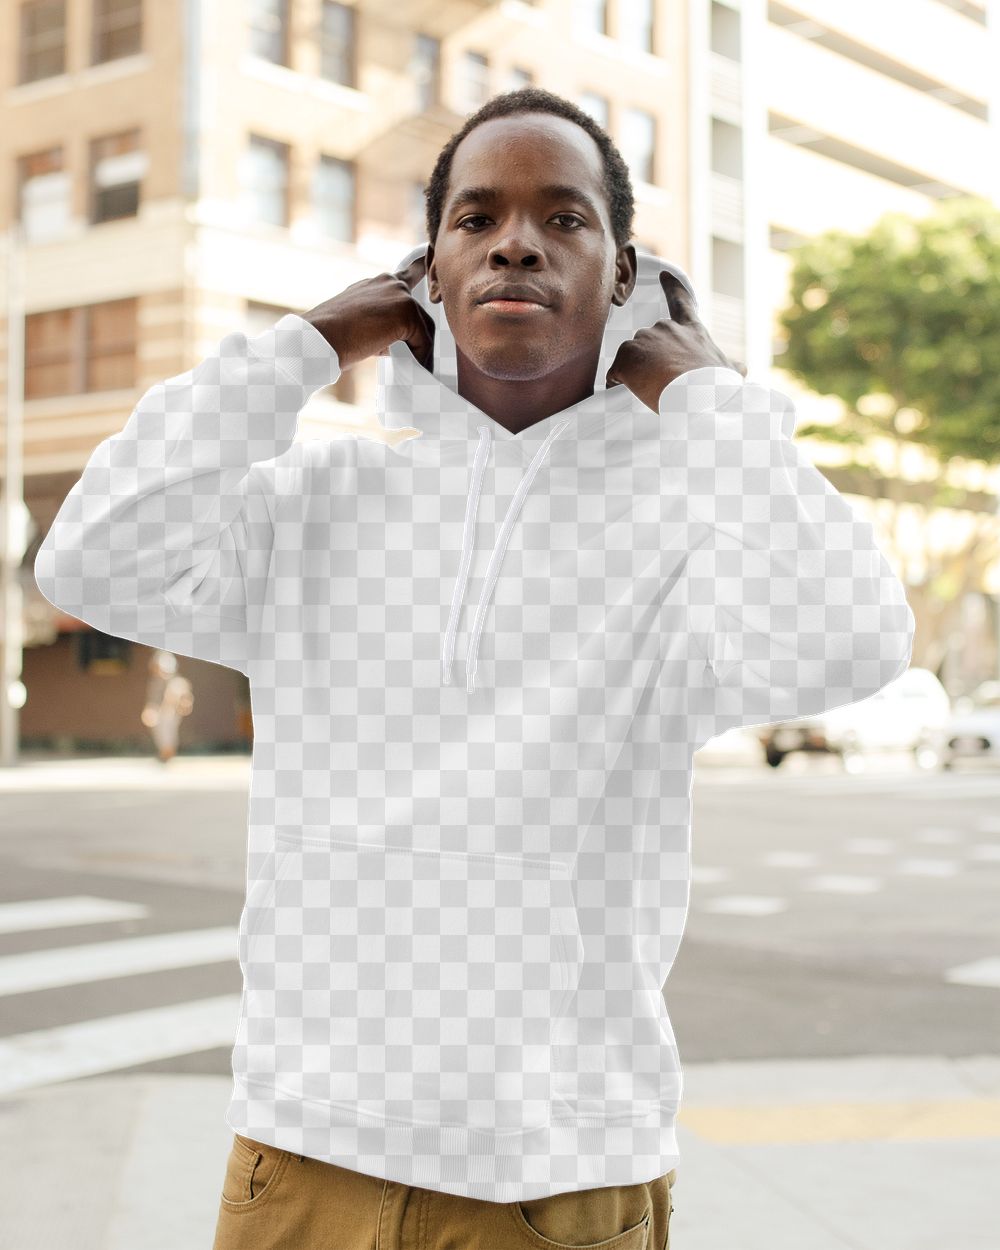 Menswear png hoodie mockup on man with brown pants in the city